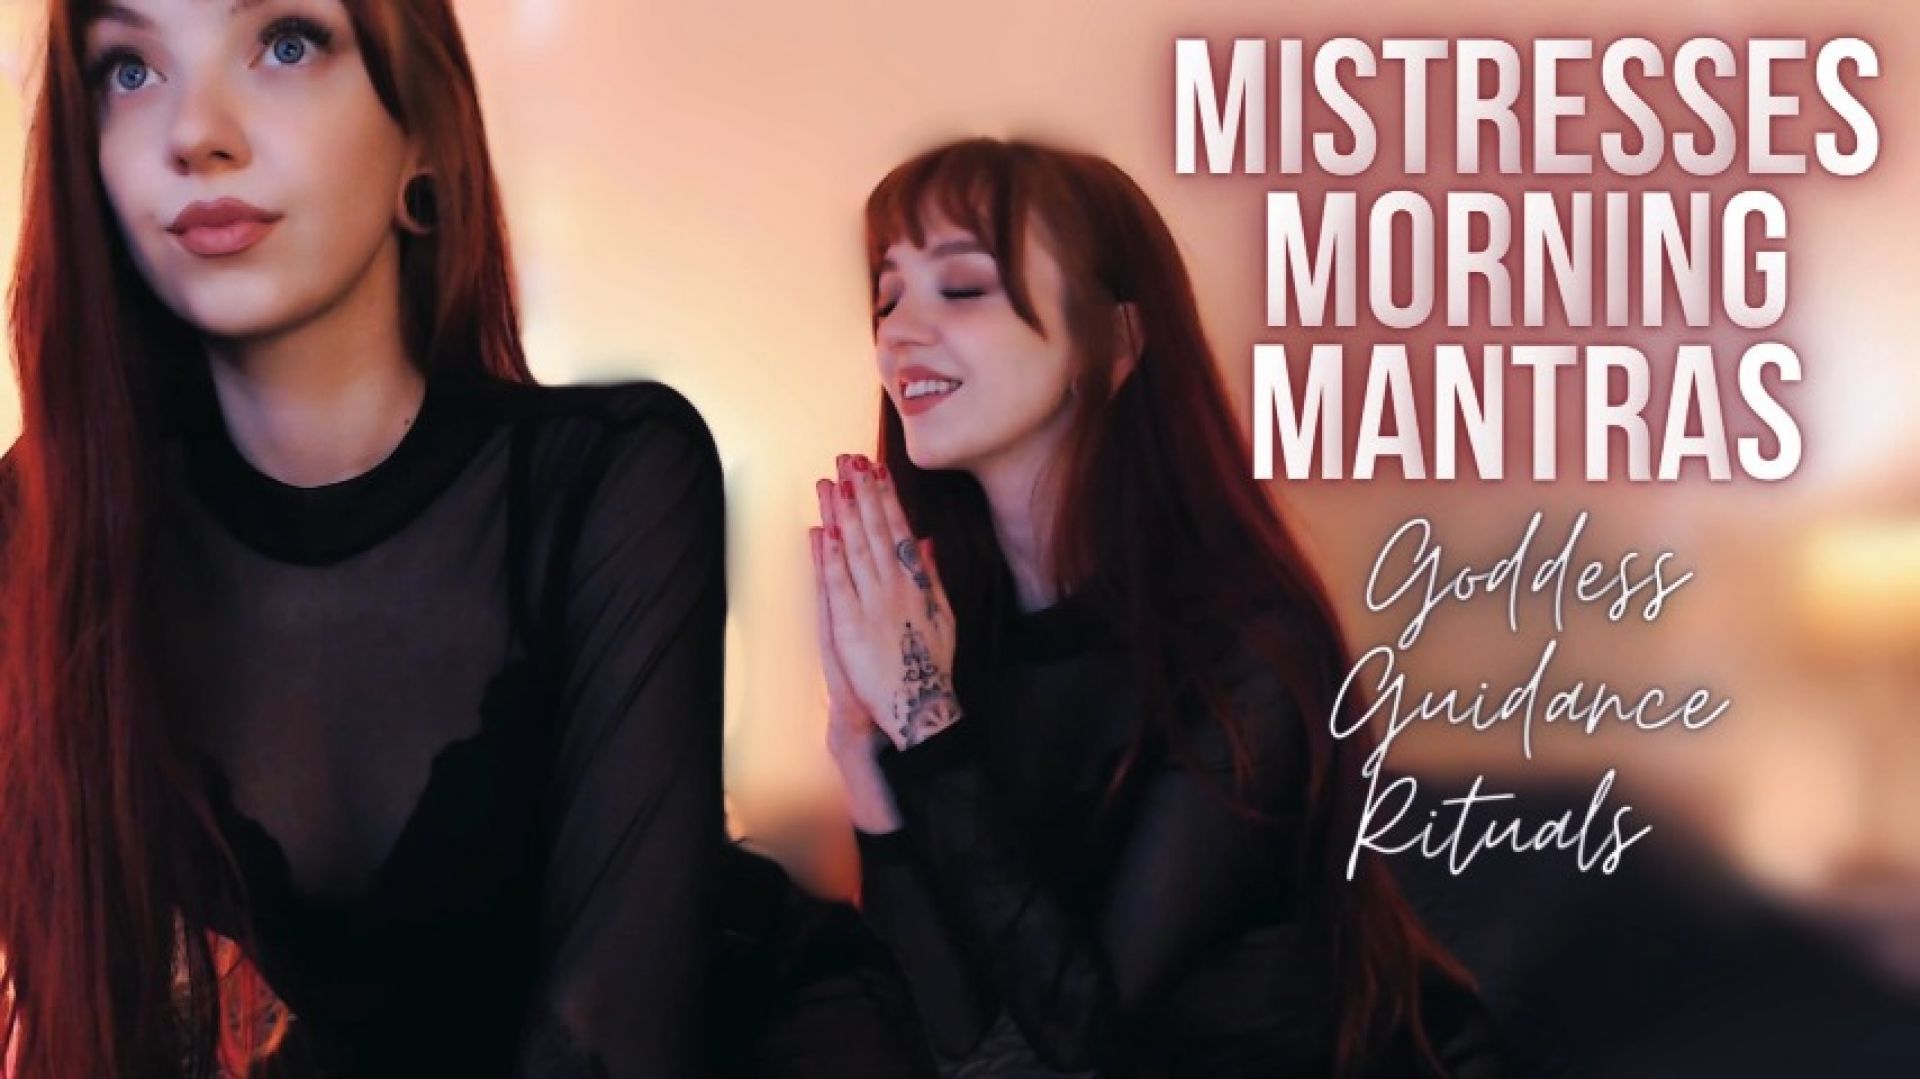 Mistresses Morning Mantras: Goddess Guidance Rituals